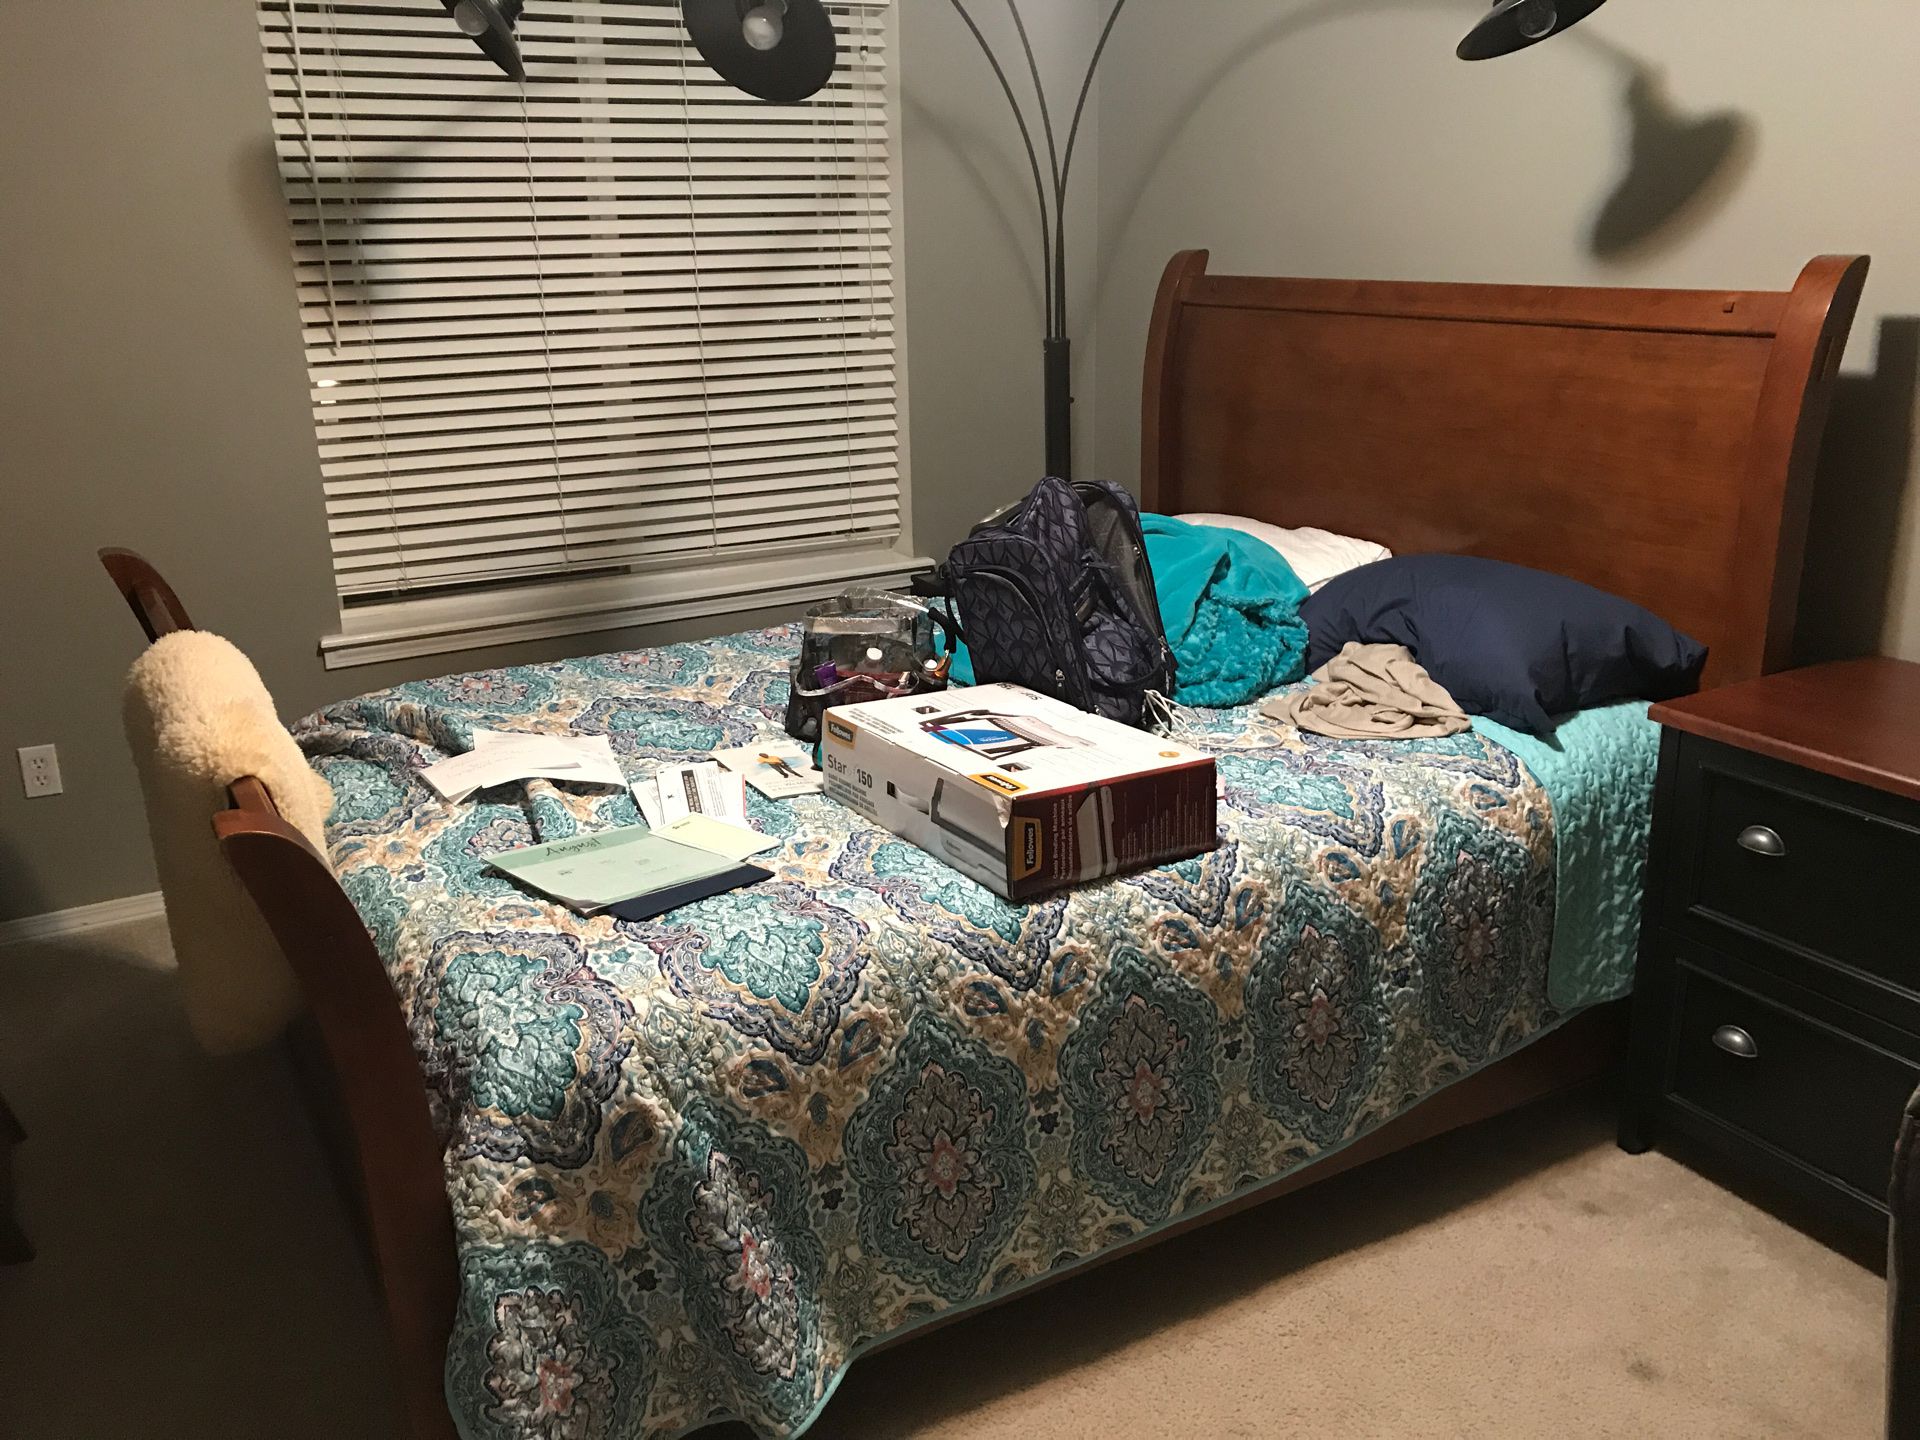 Queen Bed- big mattress, box, and frame